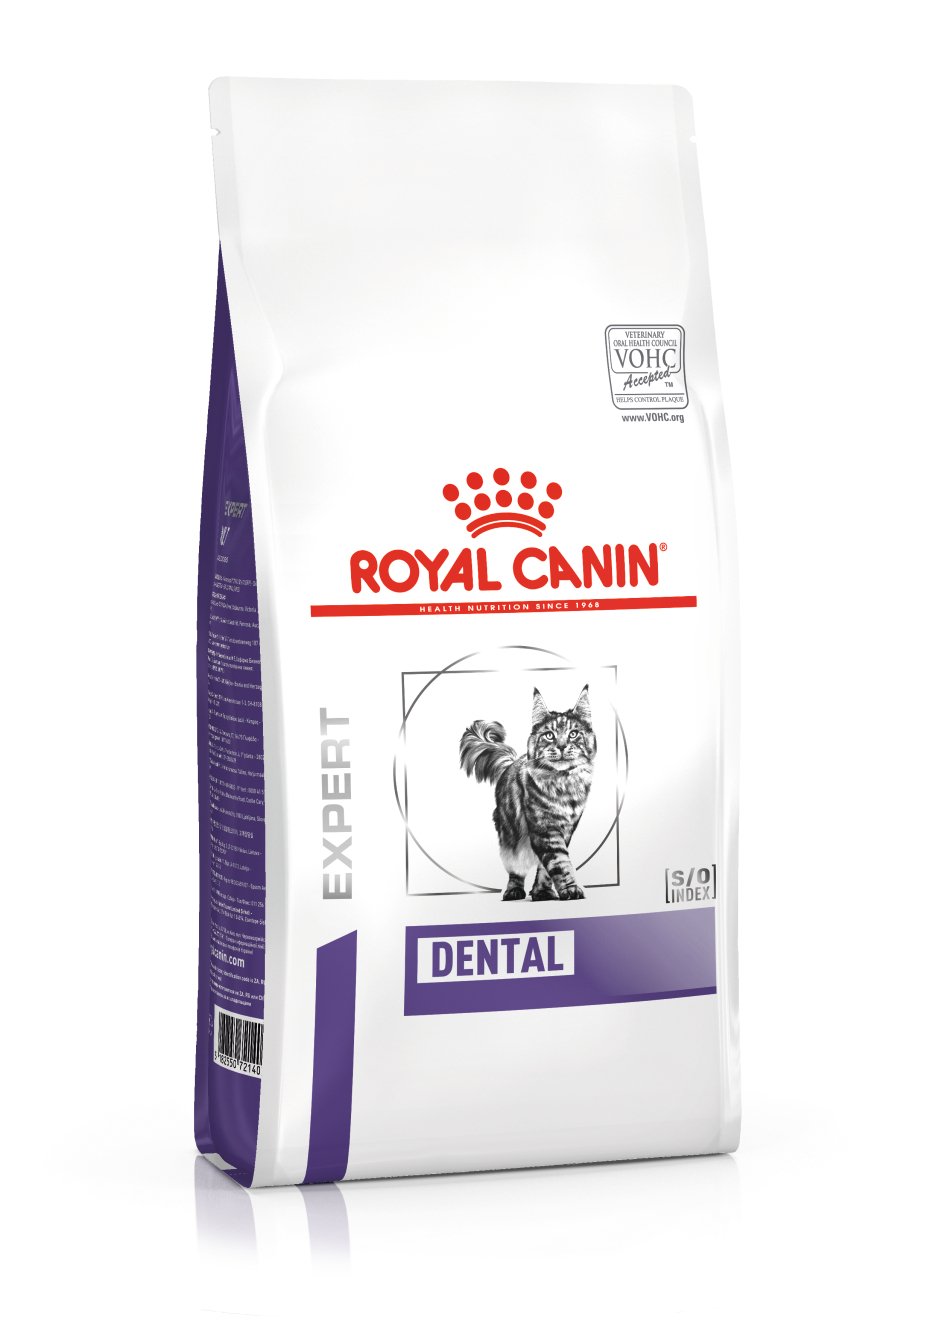 Royal Canin Expert Dental pienso para gatos